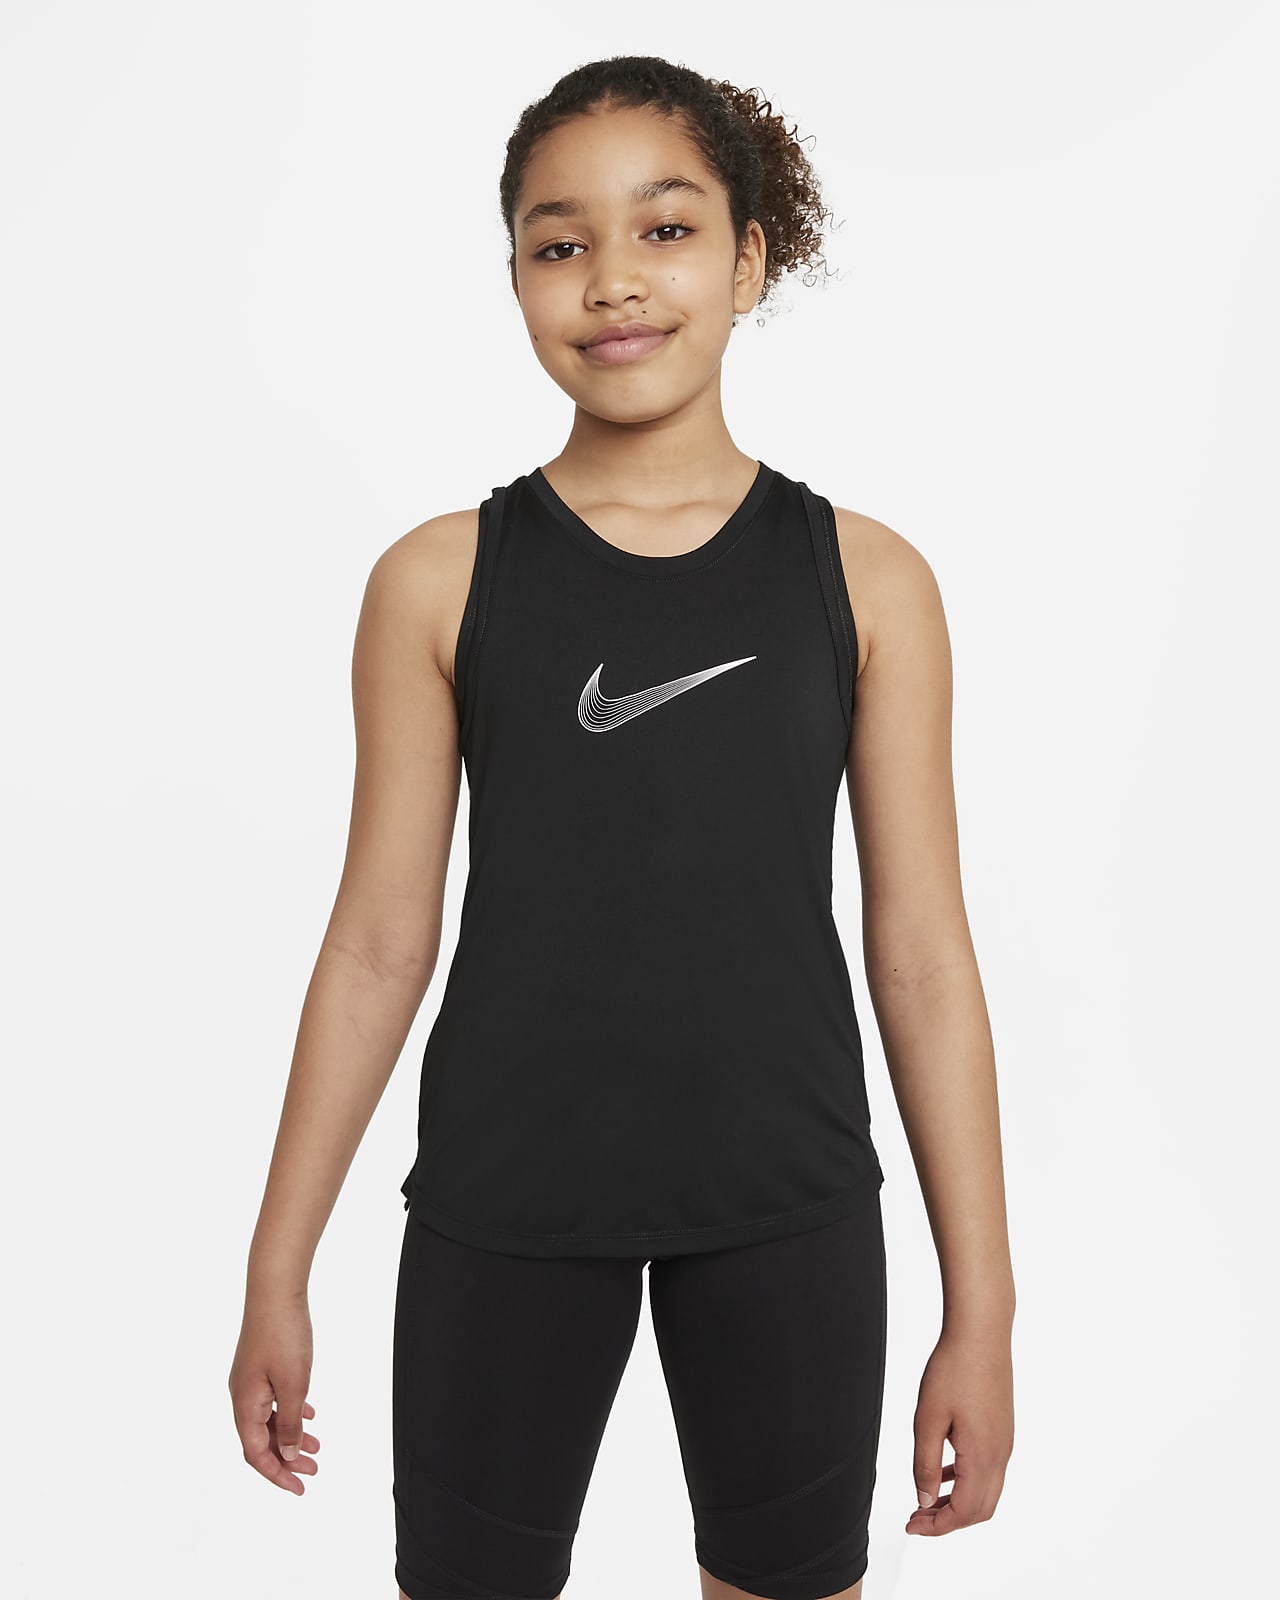 Nike Dri-FIT One Older Kids' (Girls') Training Tank